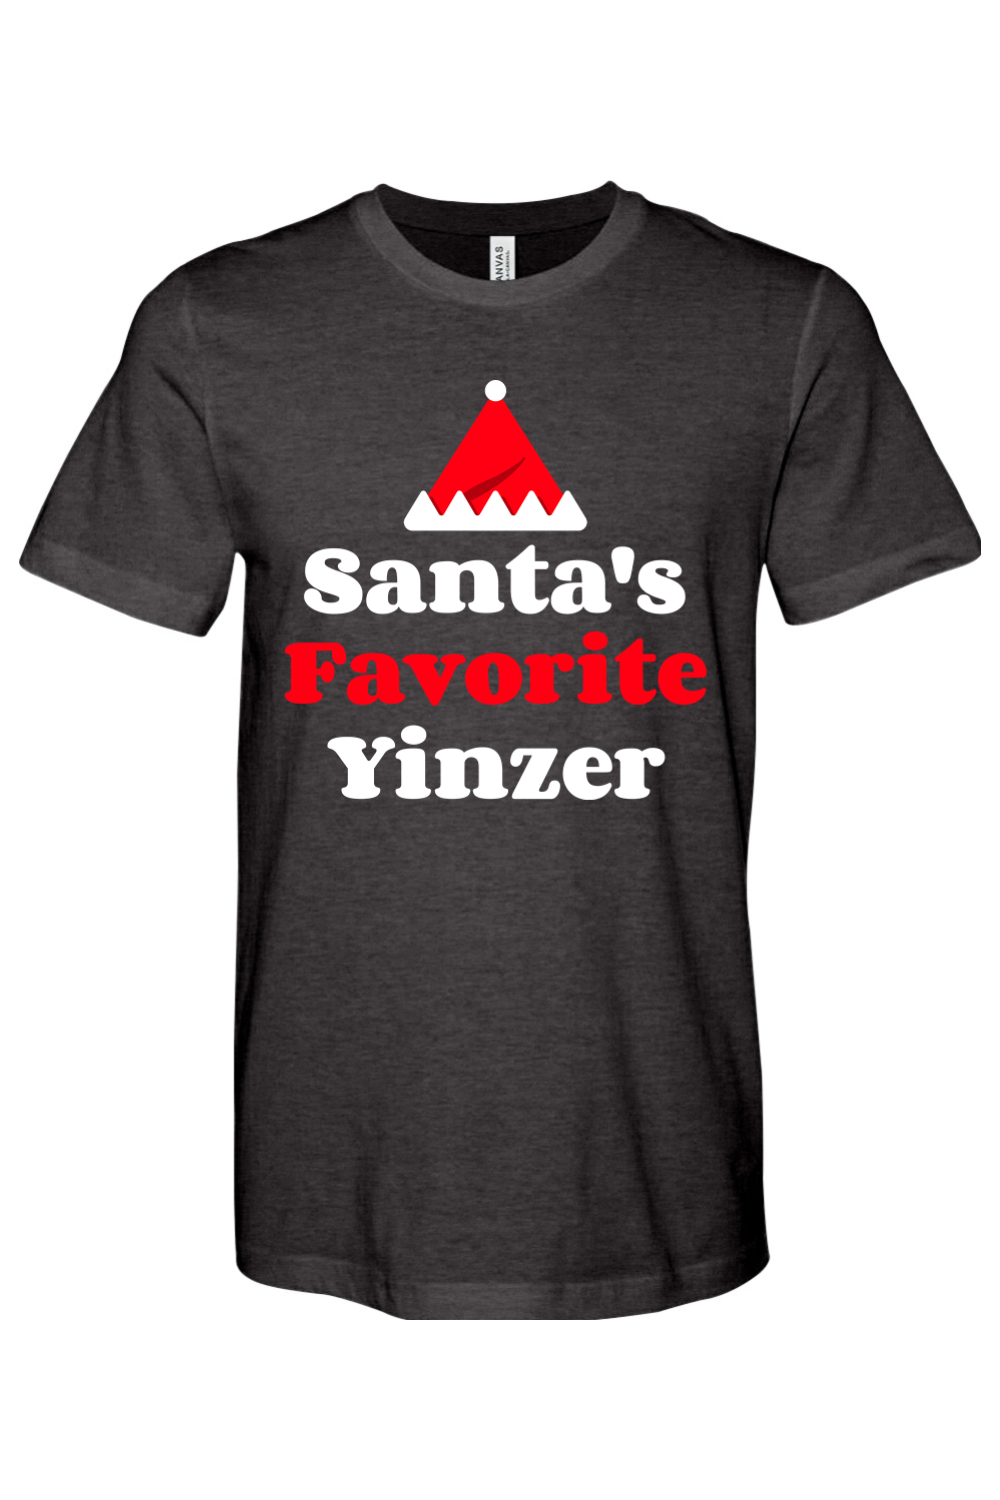 Santa's Favorite Yinzer - Yinzylvania